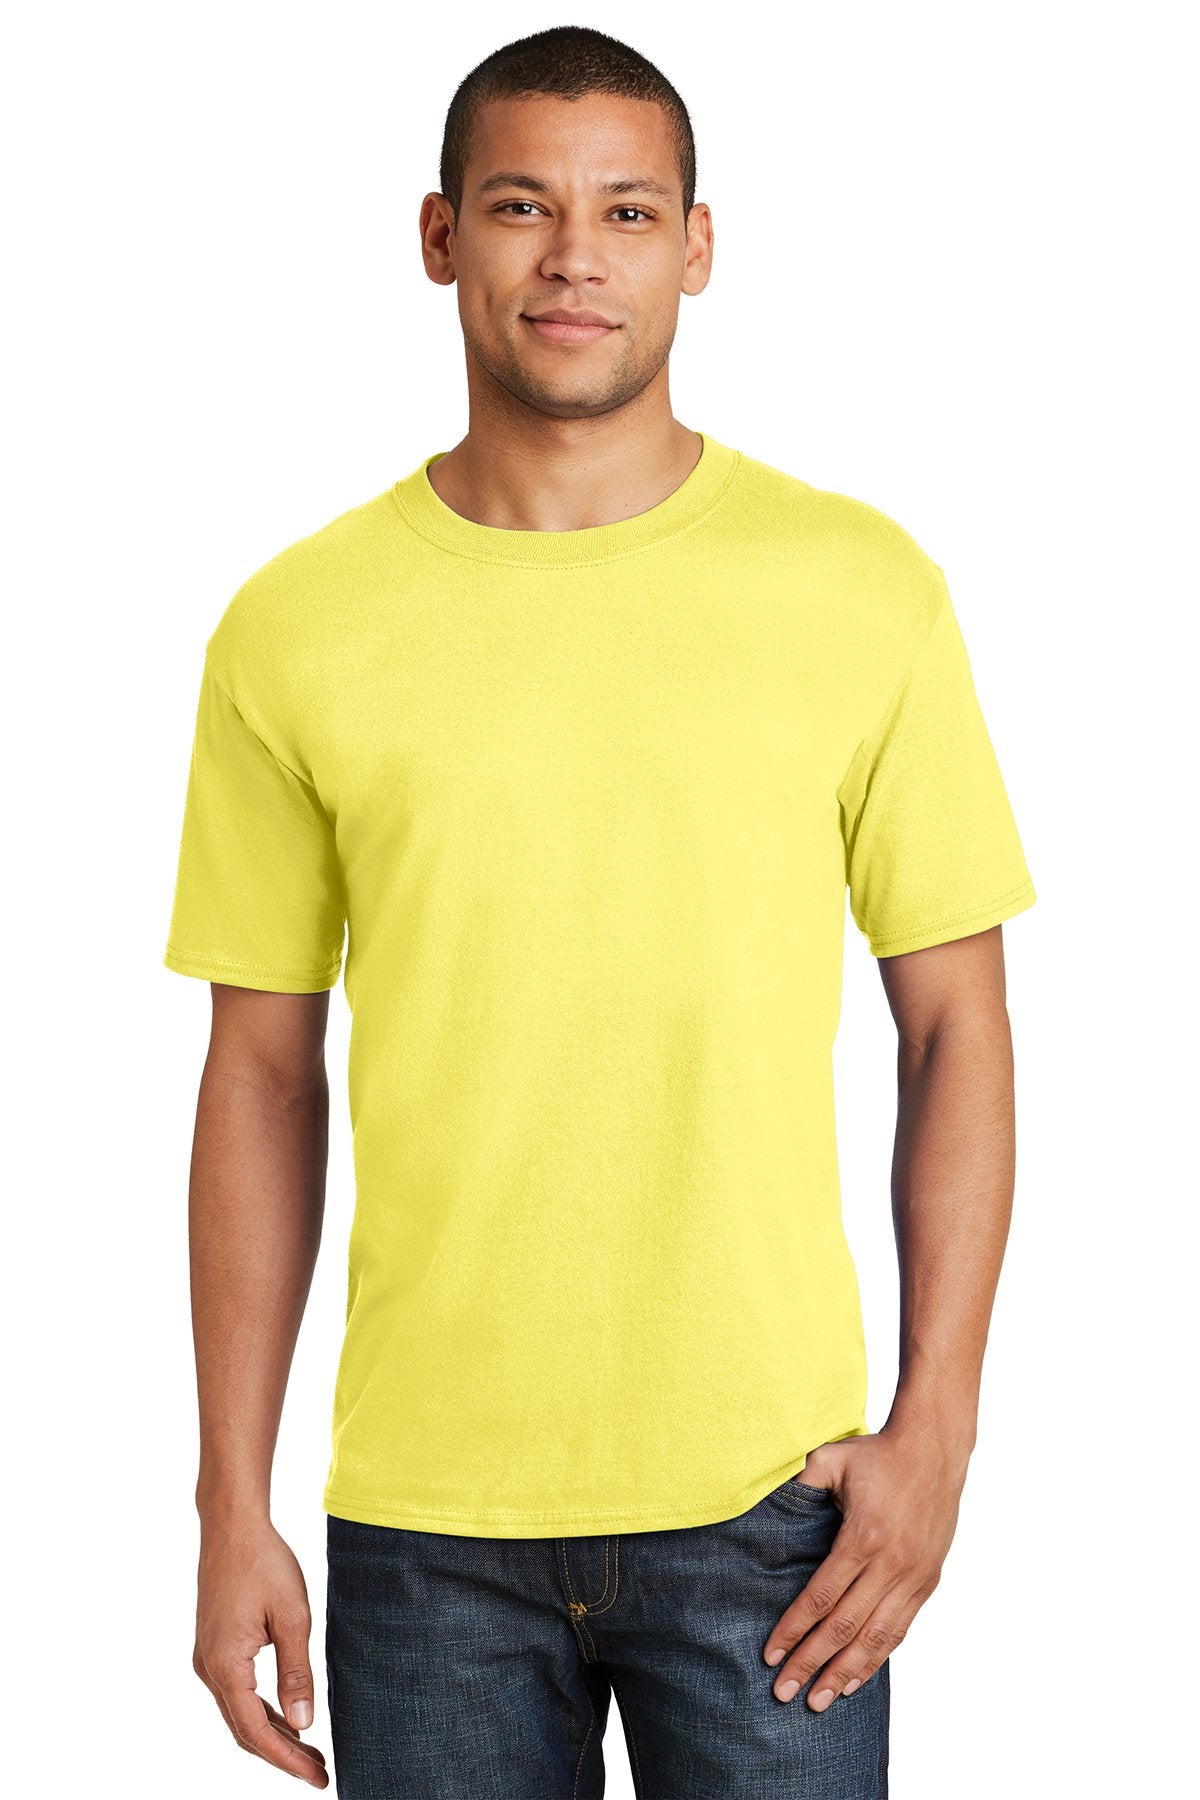 hanes beefy cotton t shirt 5180 yellow